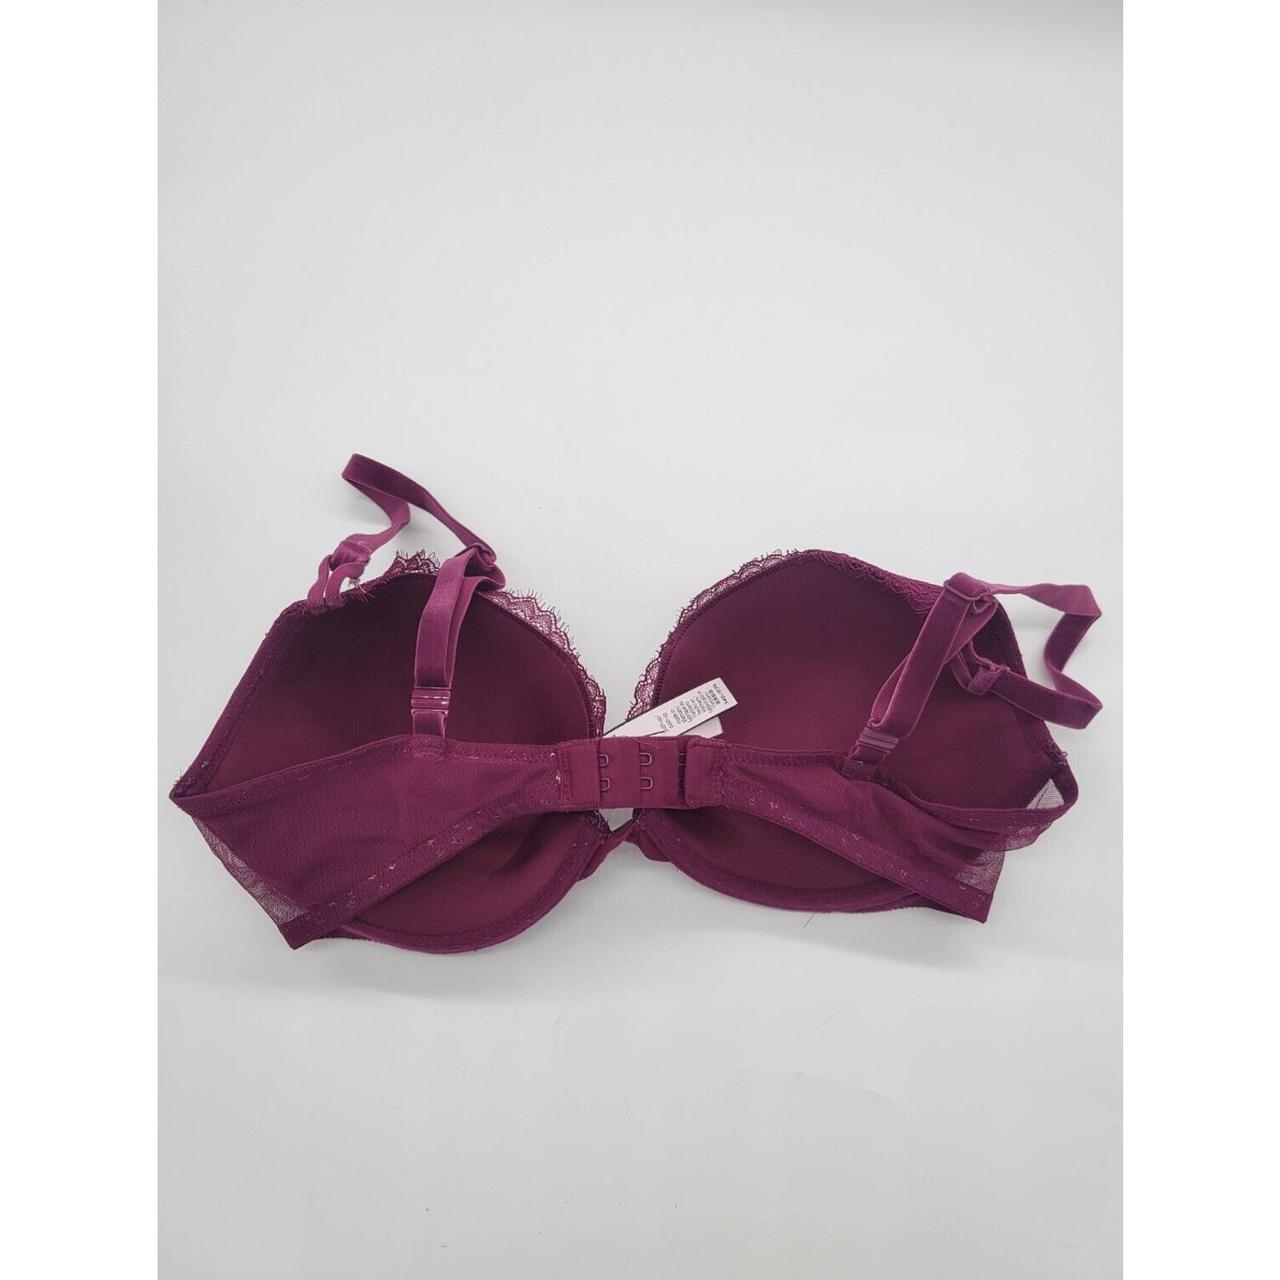 Victoria Secret Bra, purple, 34D #victoriasecret #bra - Depop